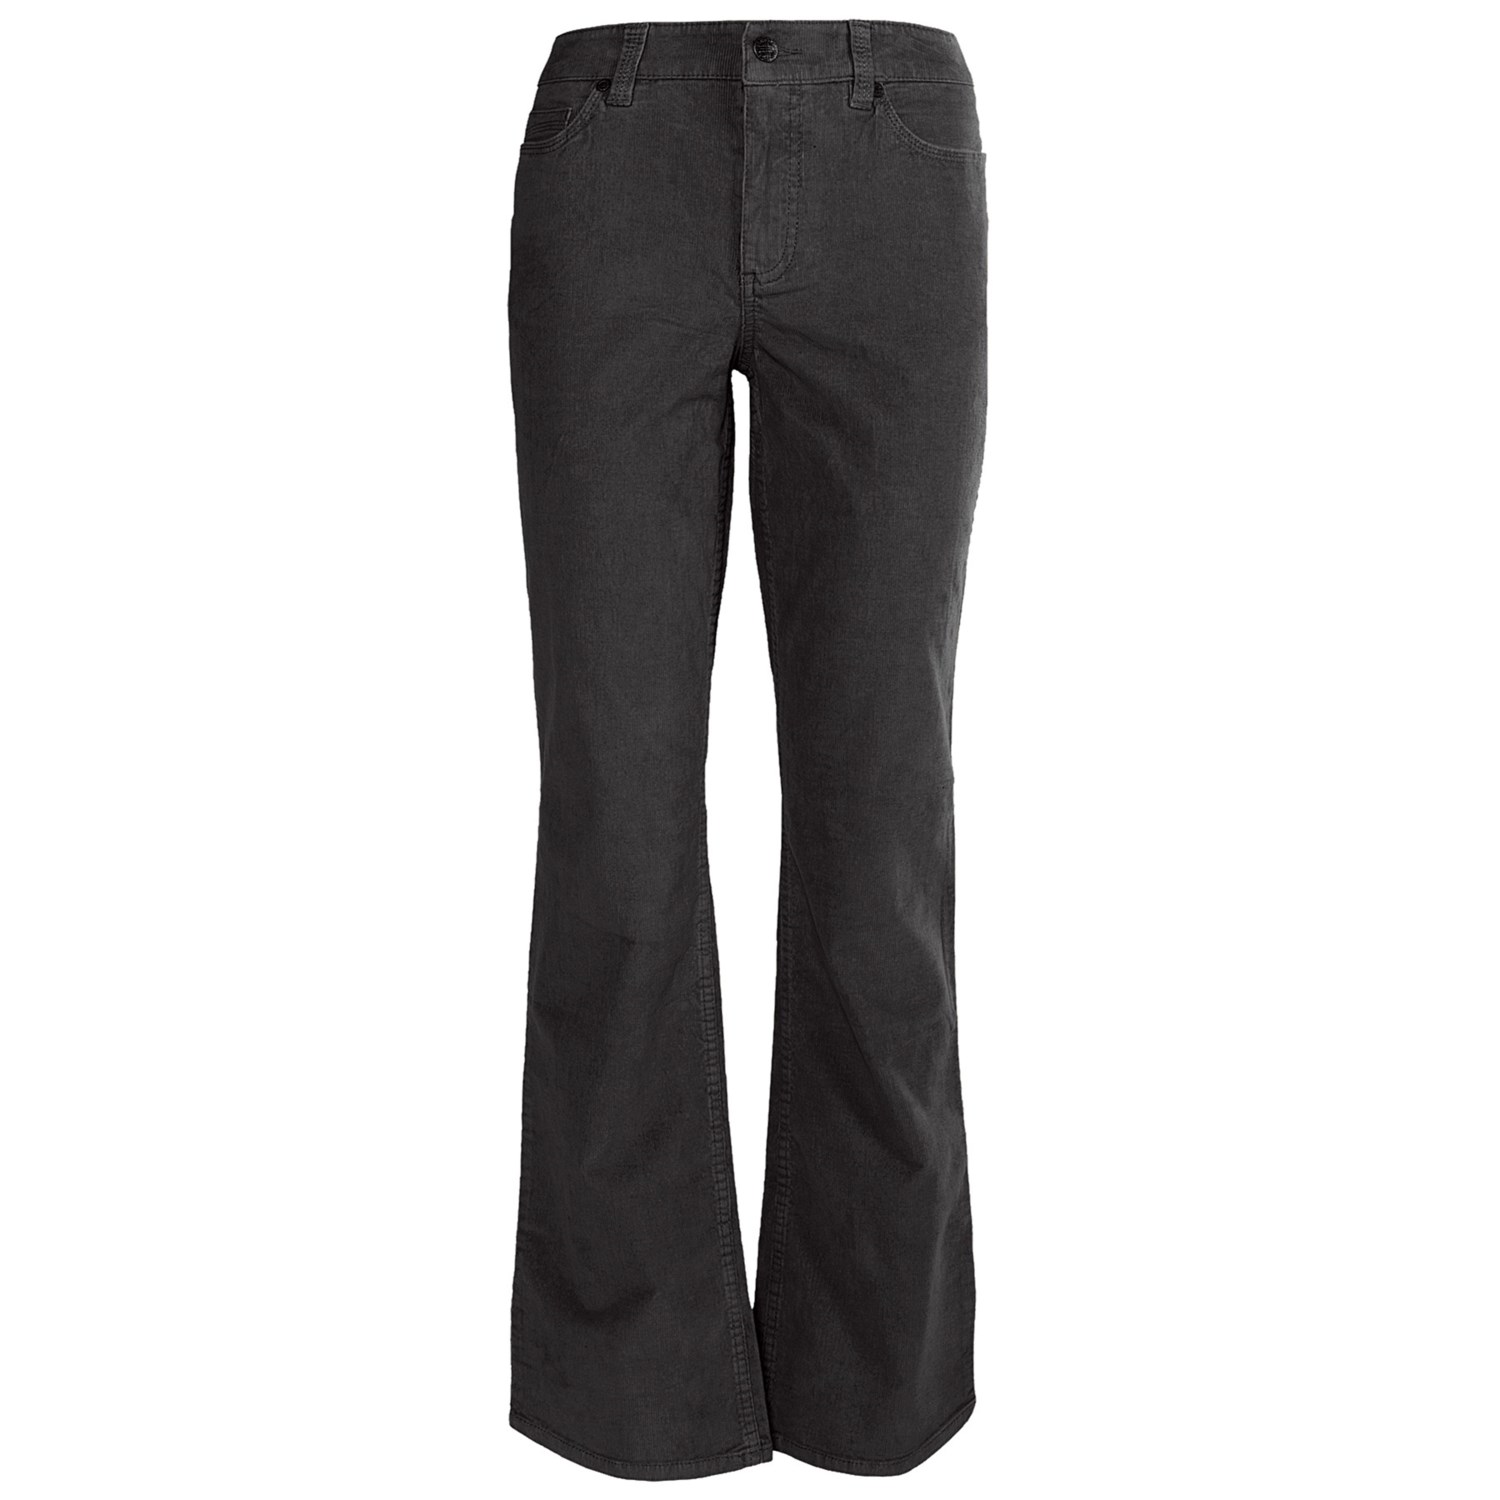 Pinwale Corduroy Pants (For Women) 4745Y - Save 58%